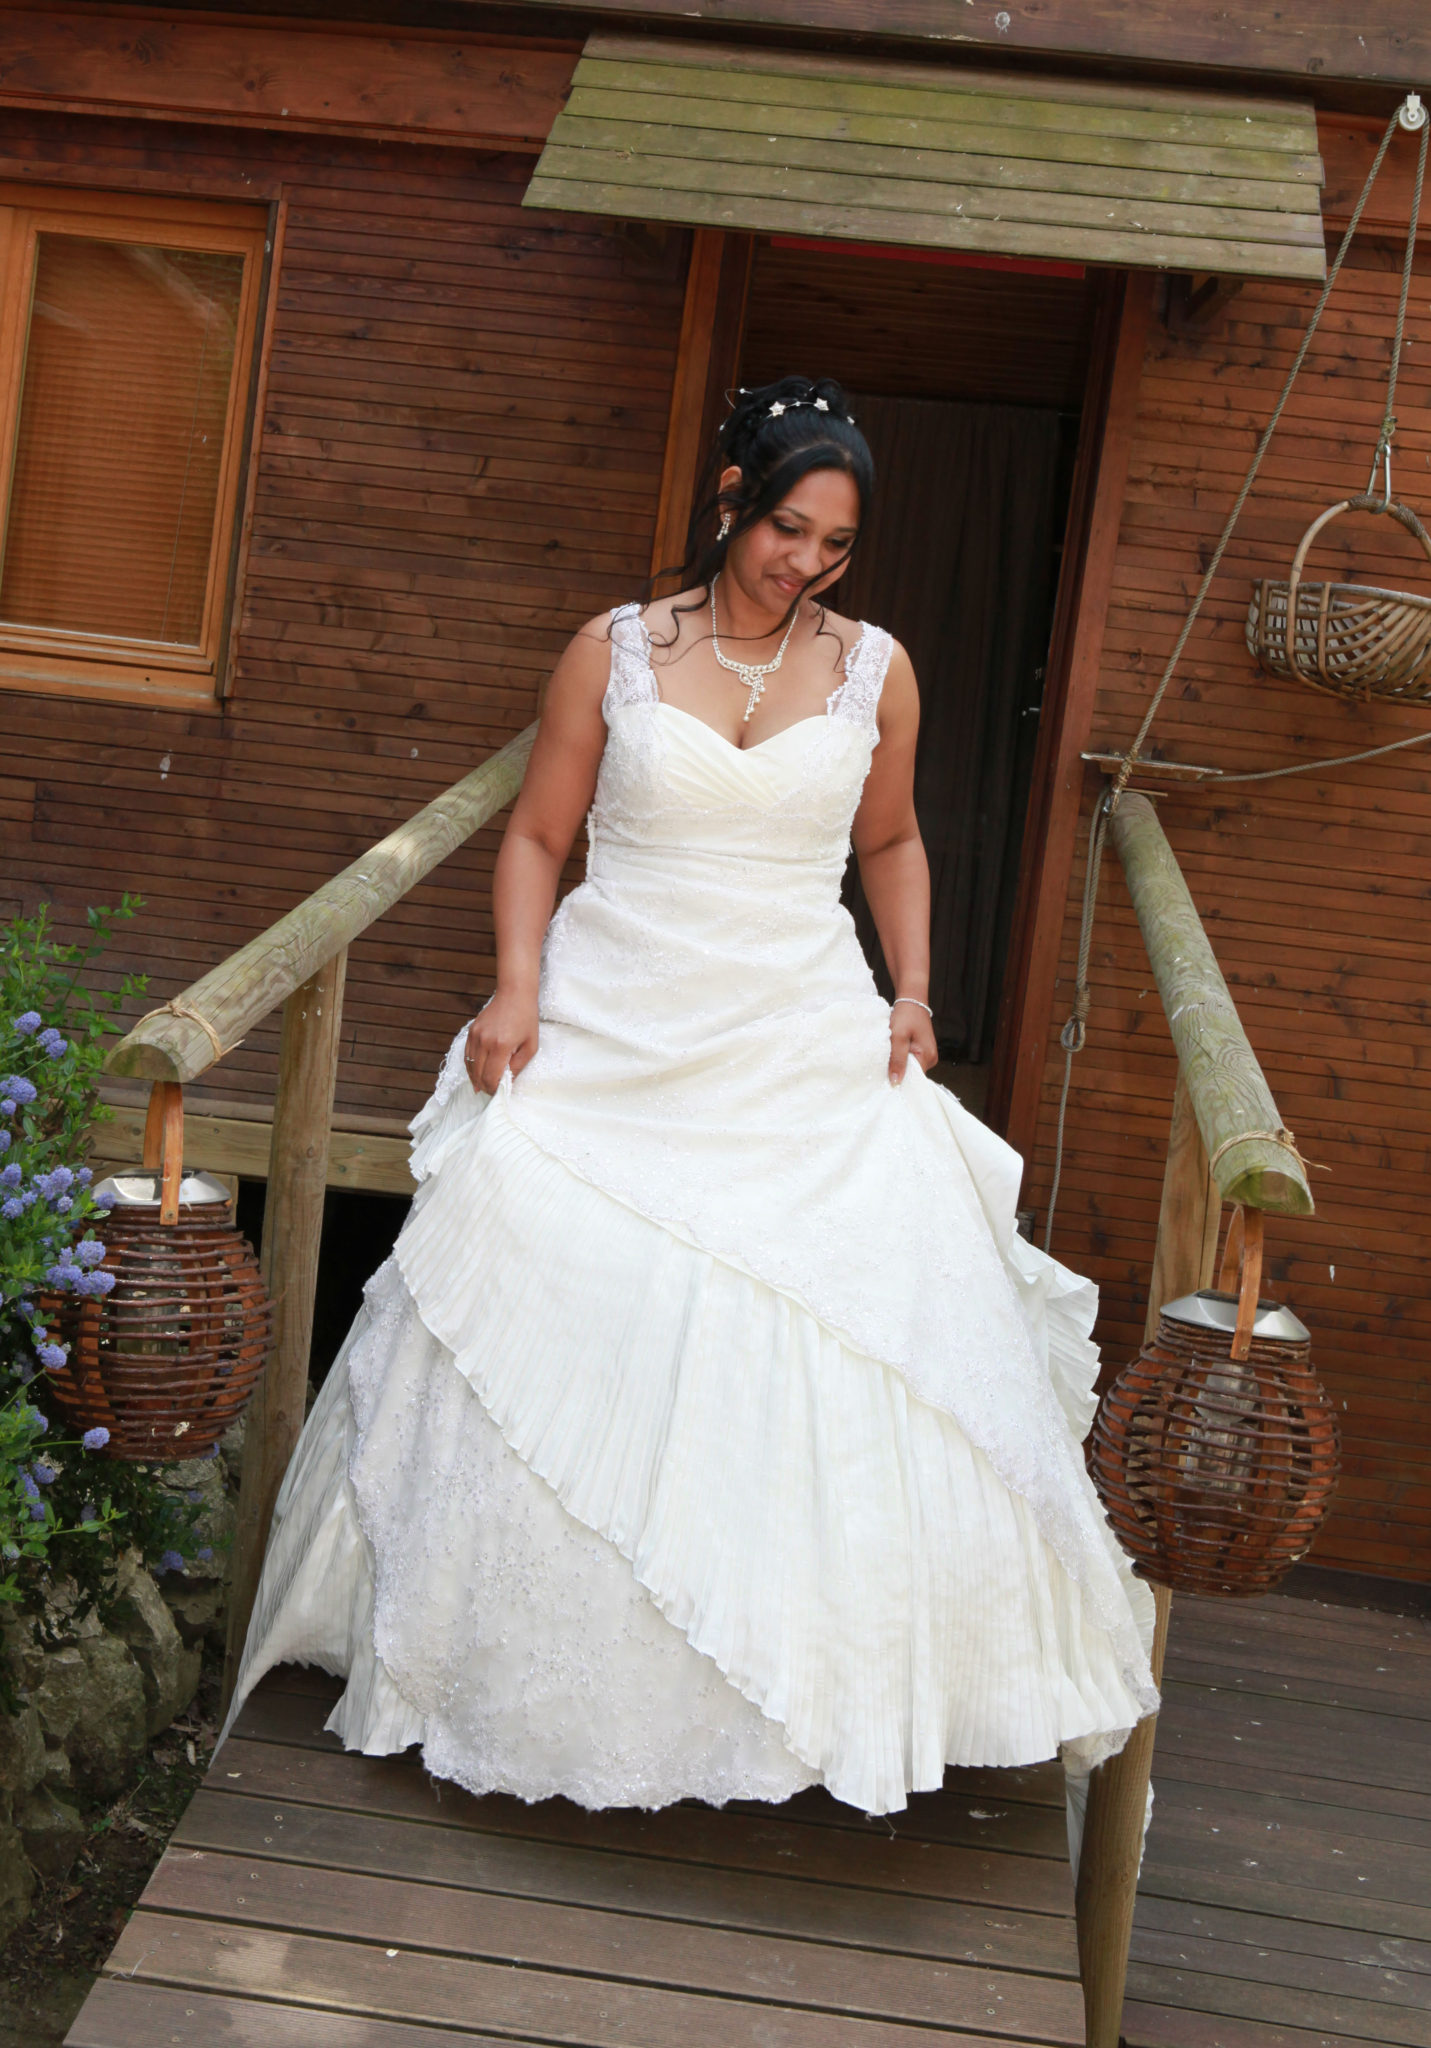 Hemaposesesvalises_the_wedding_dress_2